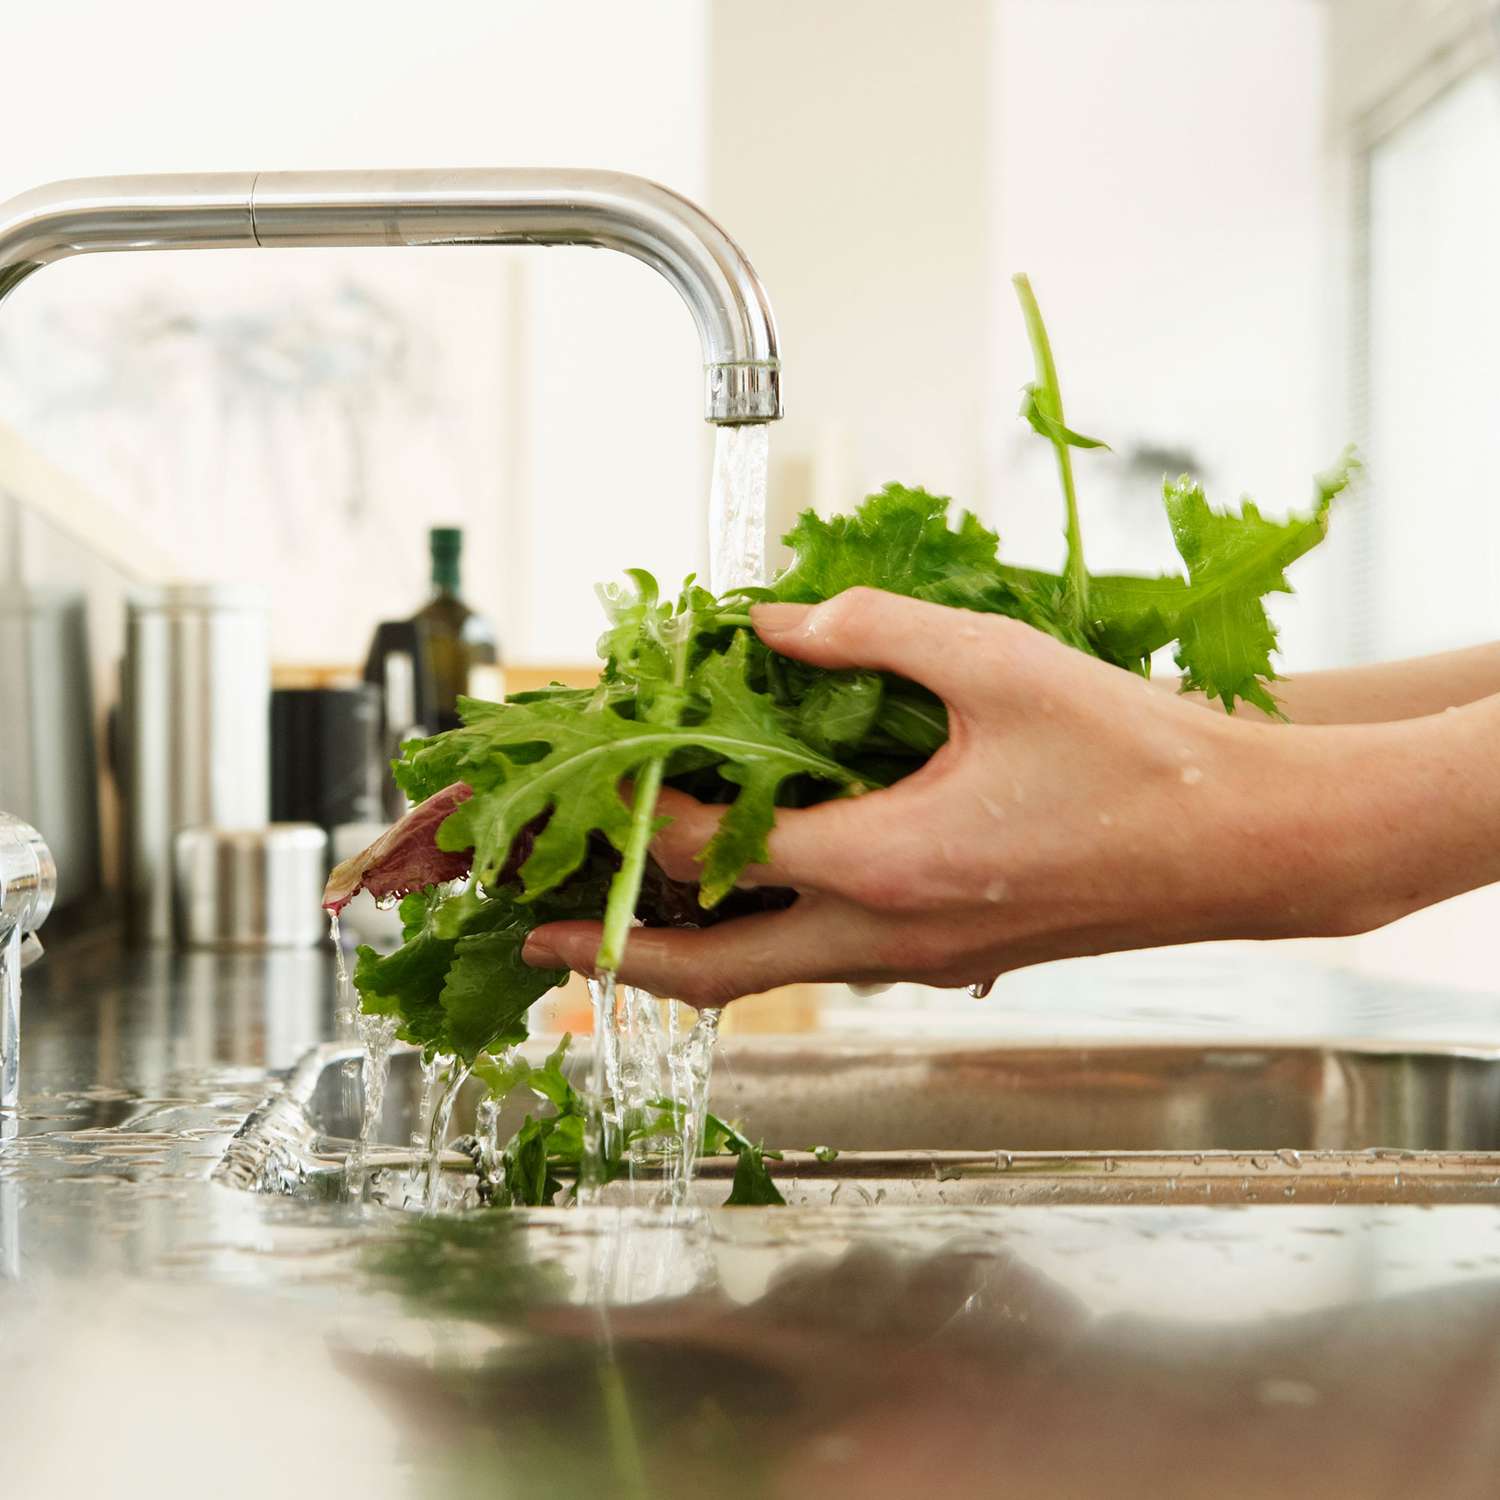 hands holding salad greens under a running kitchen faucet